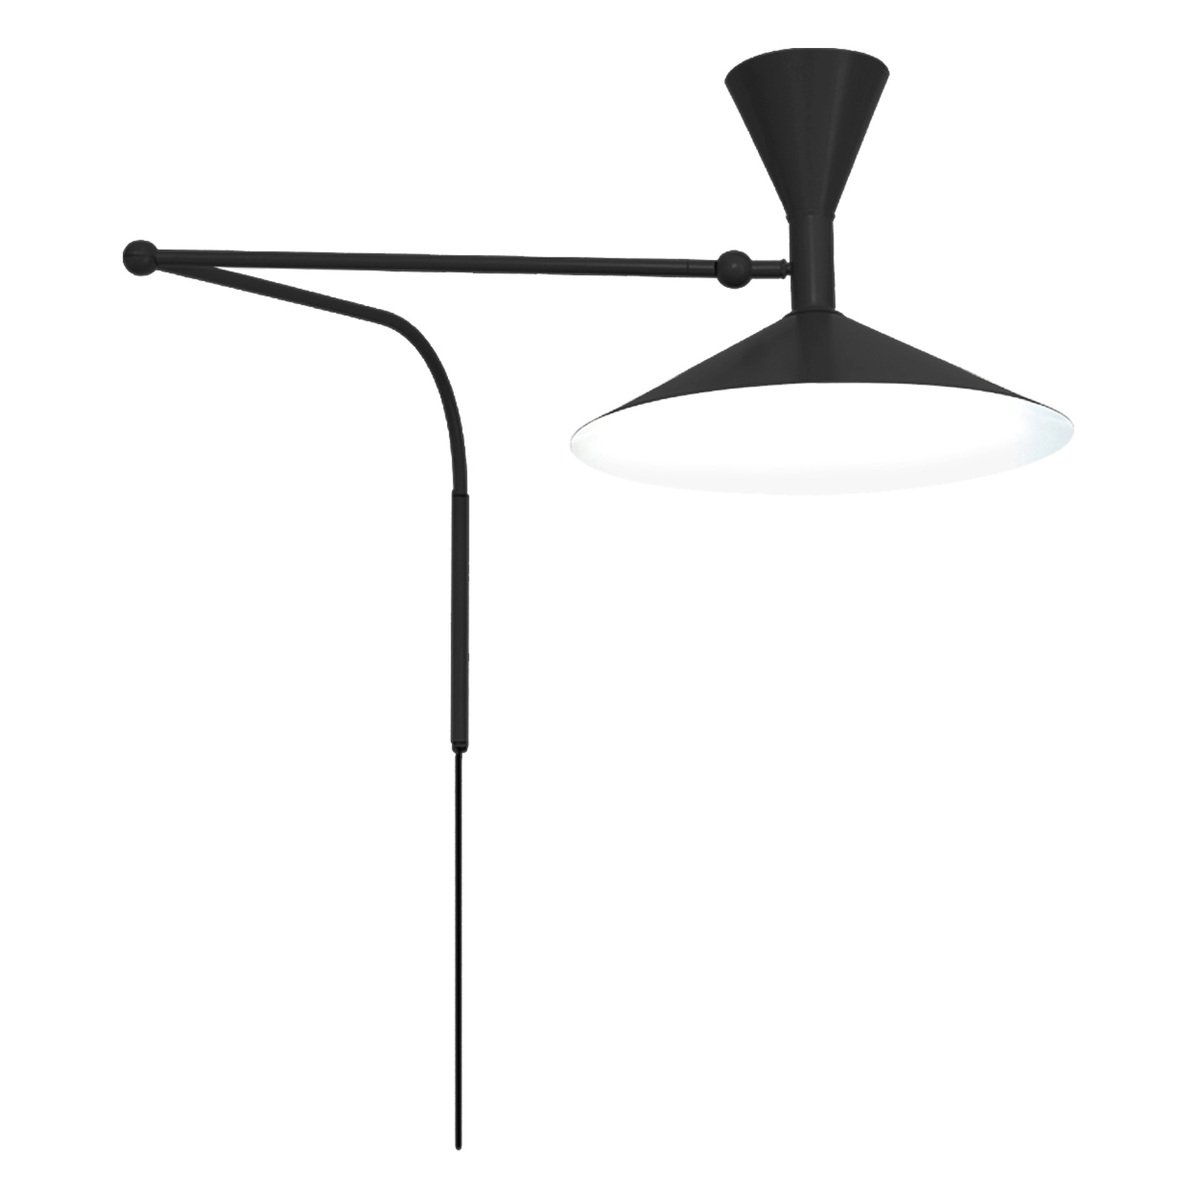 Lampe DEL Ready G9 Light made in EU Home Office Aluminium Appliques-Wall-Carlo